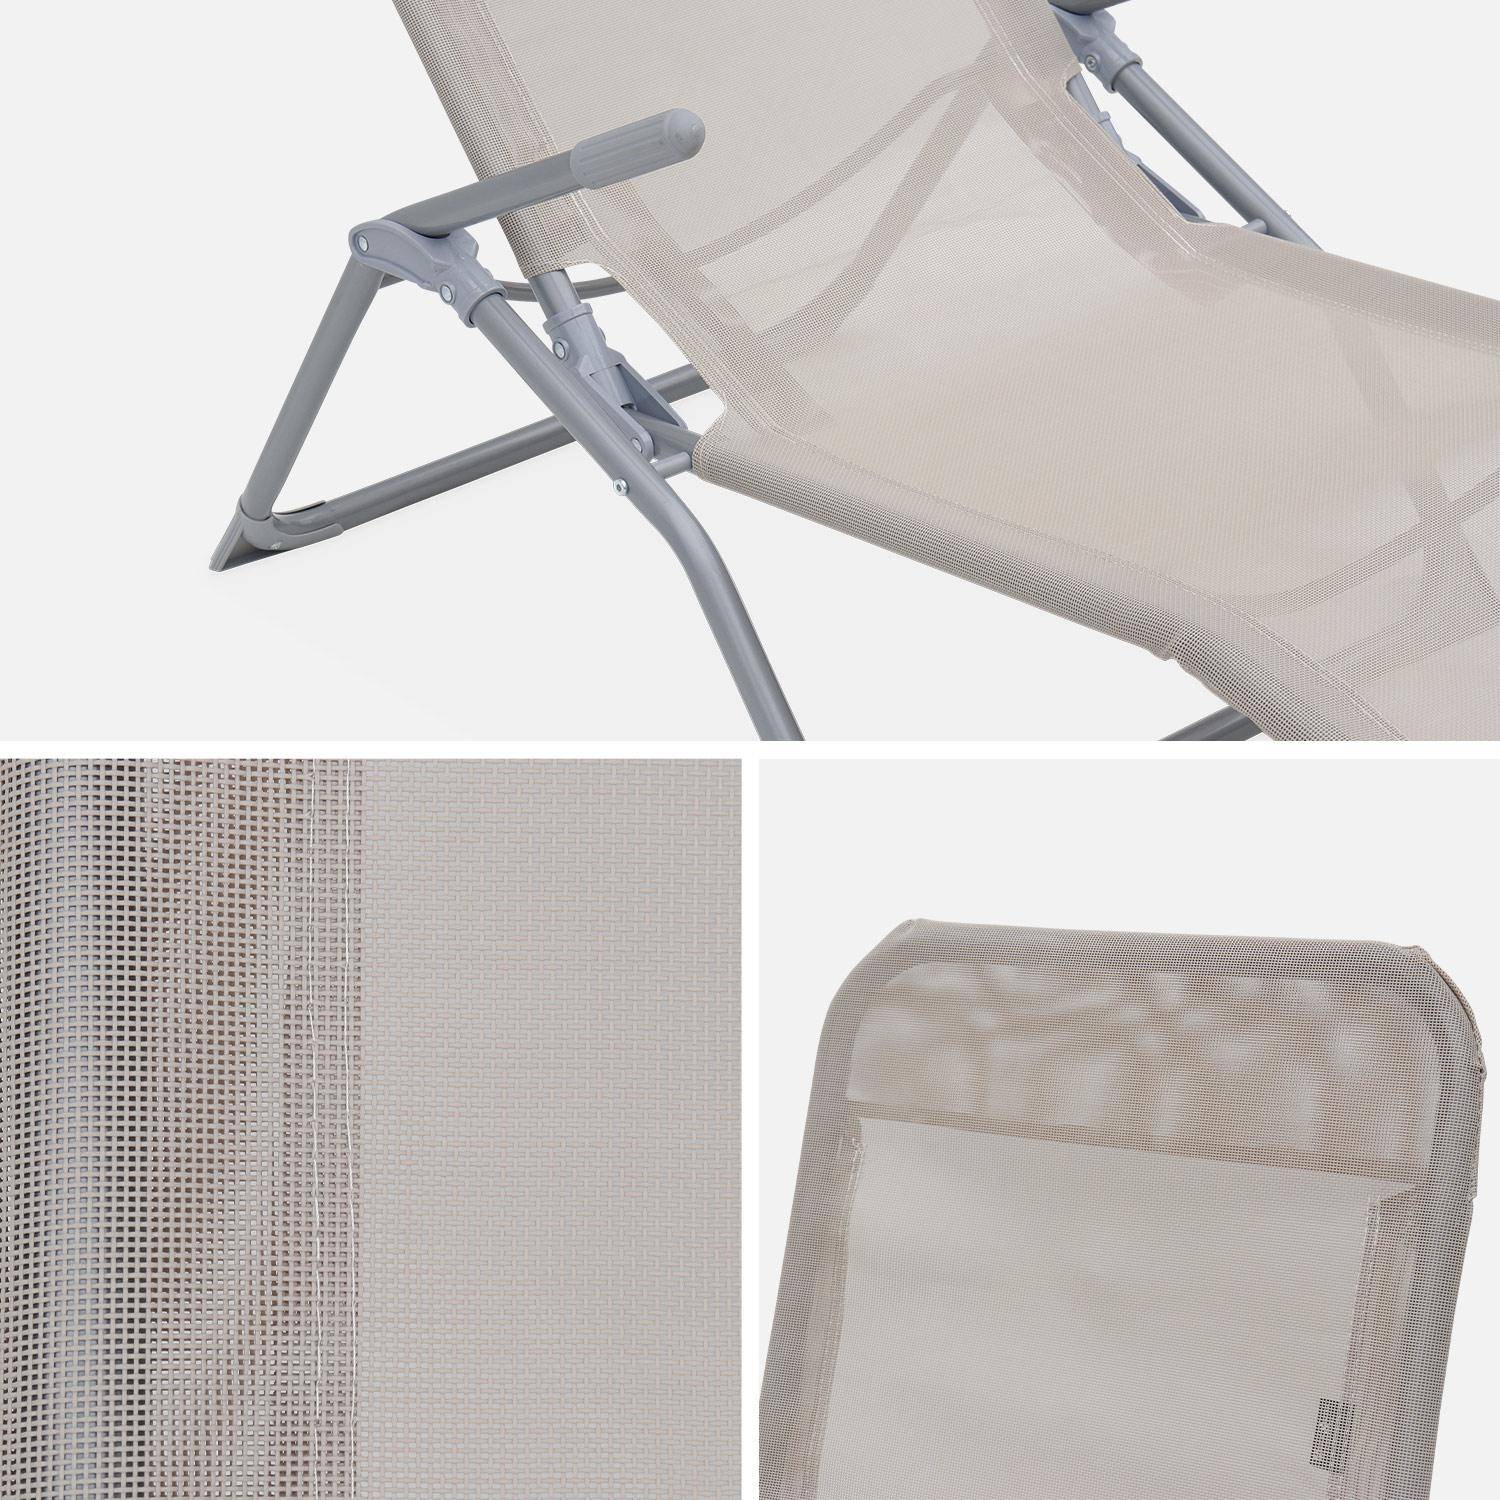 Set van 2 opvouwbare ligstoelen - Levito Taupe - Ligstoelen van textileen, 2 posities, opvouwbare ligstoelen,sweeek,Photo4